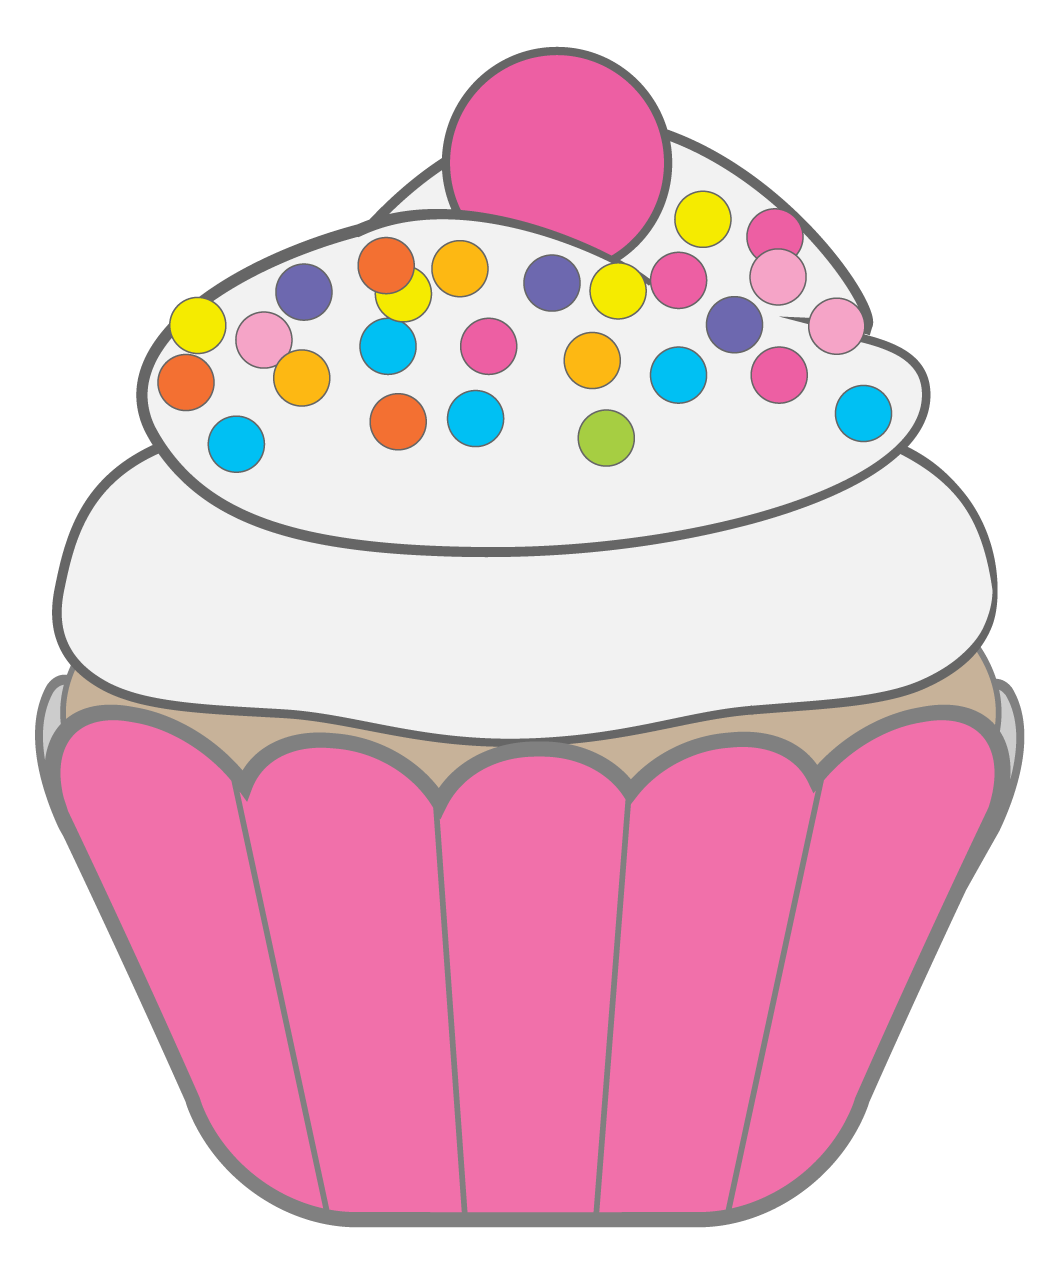 Cupcakes muffins by carol. Yogurt clipart drawn